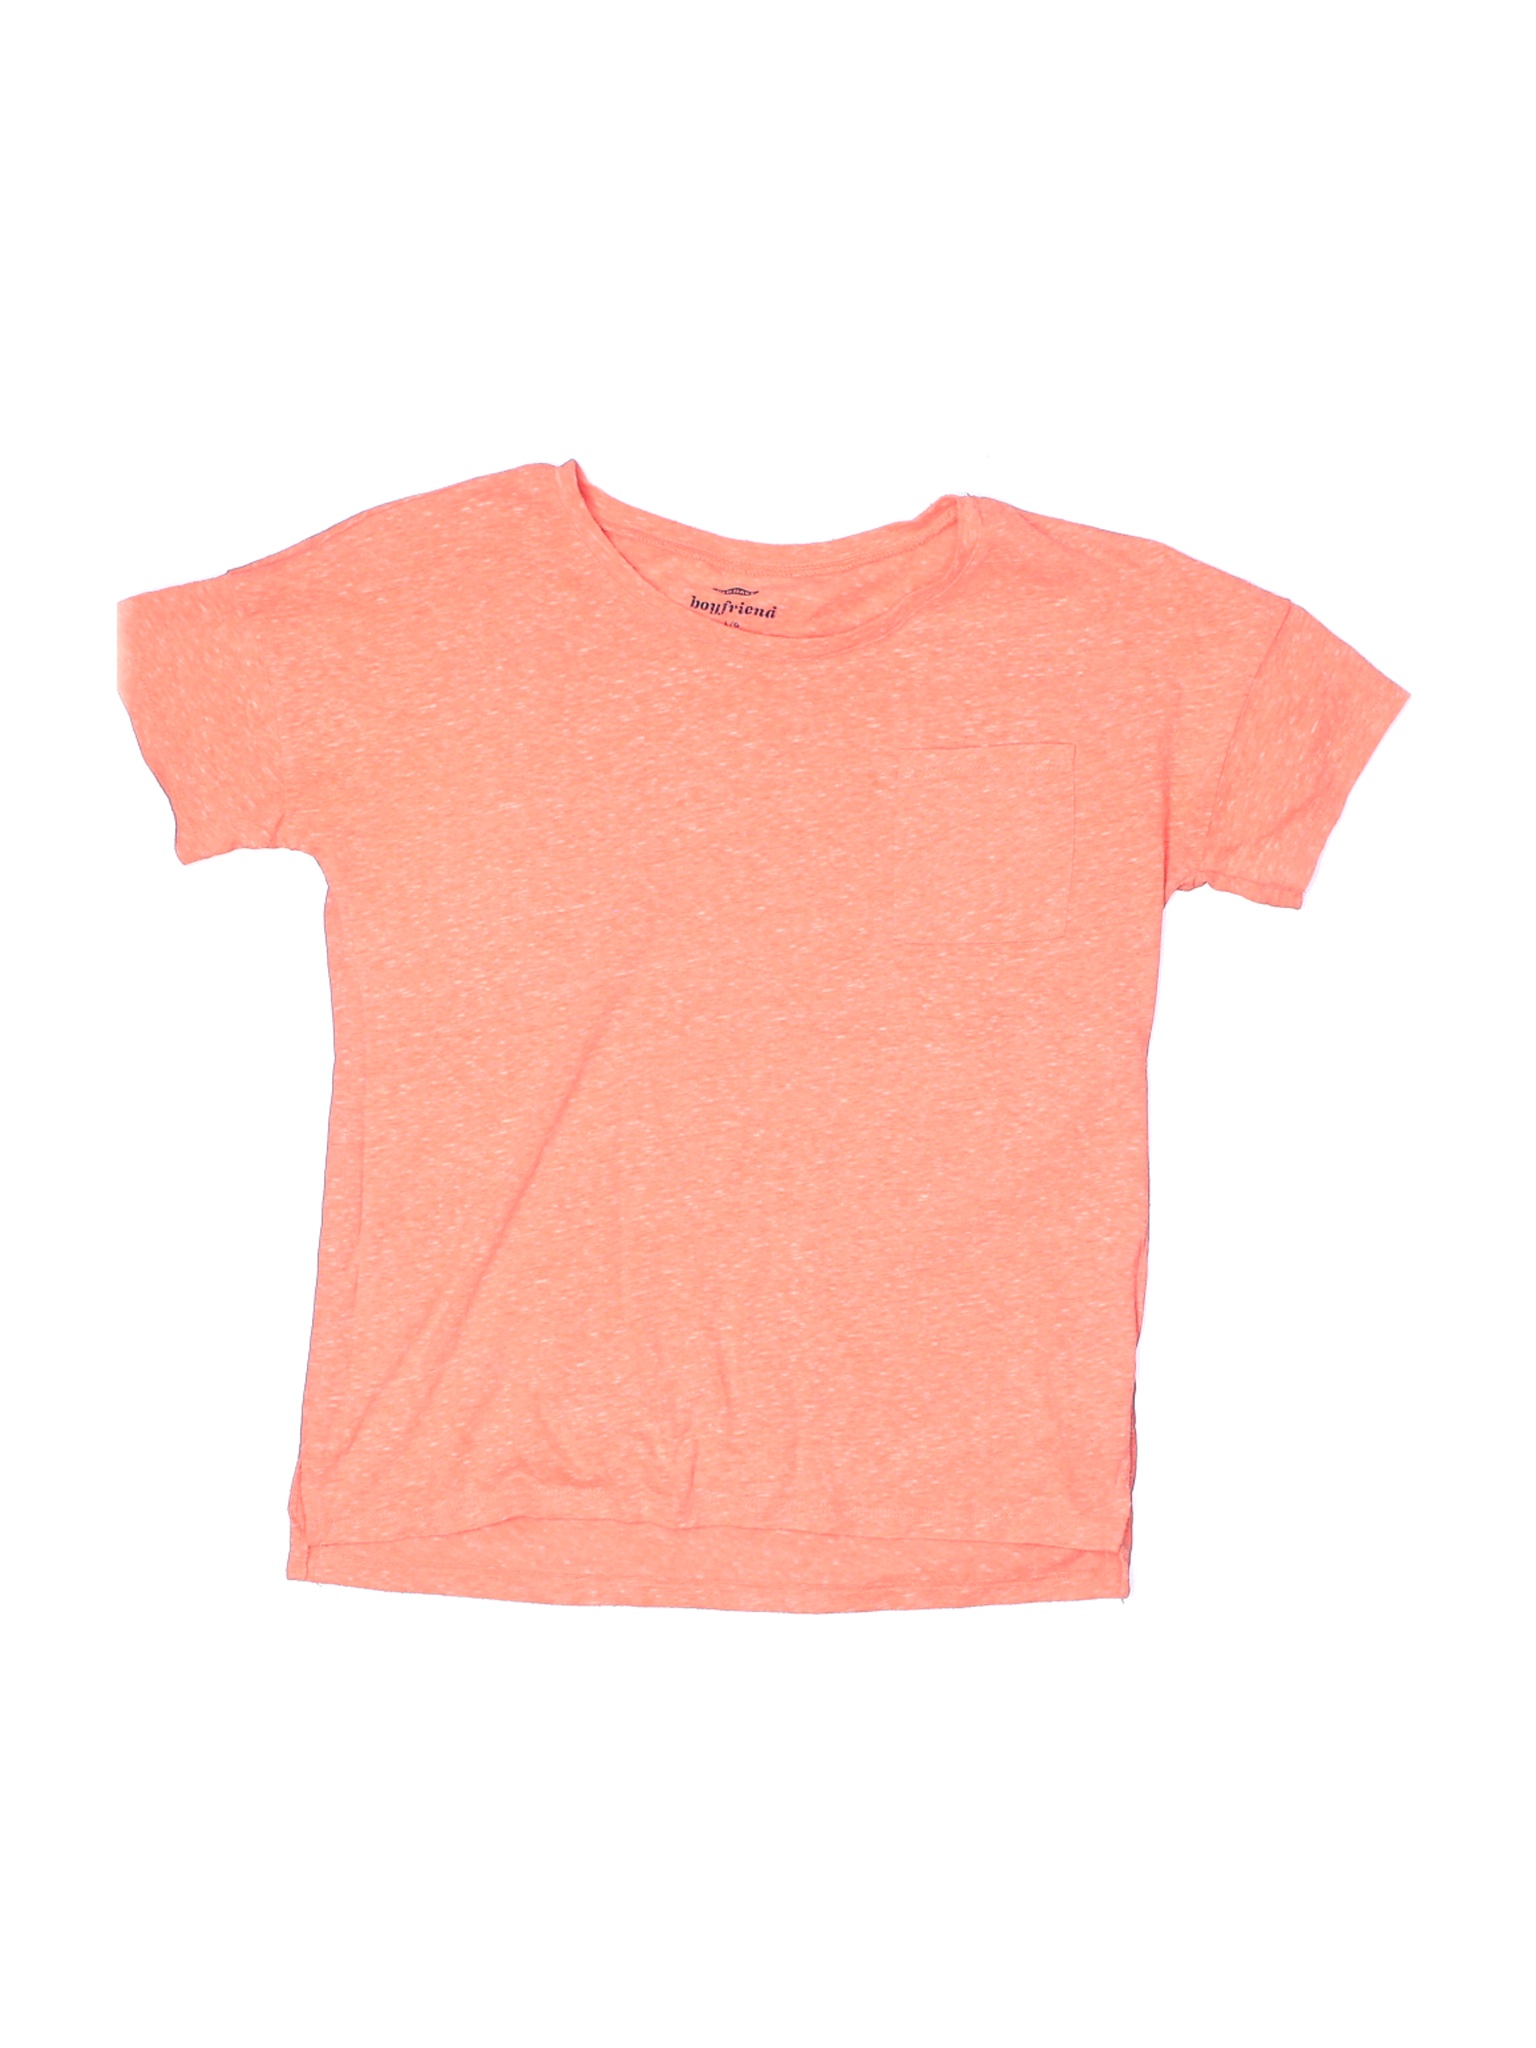 Old Navy Boys Pink Short Sleeve T-Shirt 10 | eBay